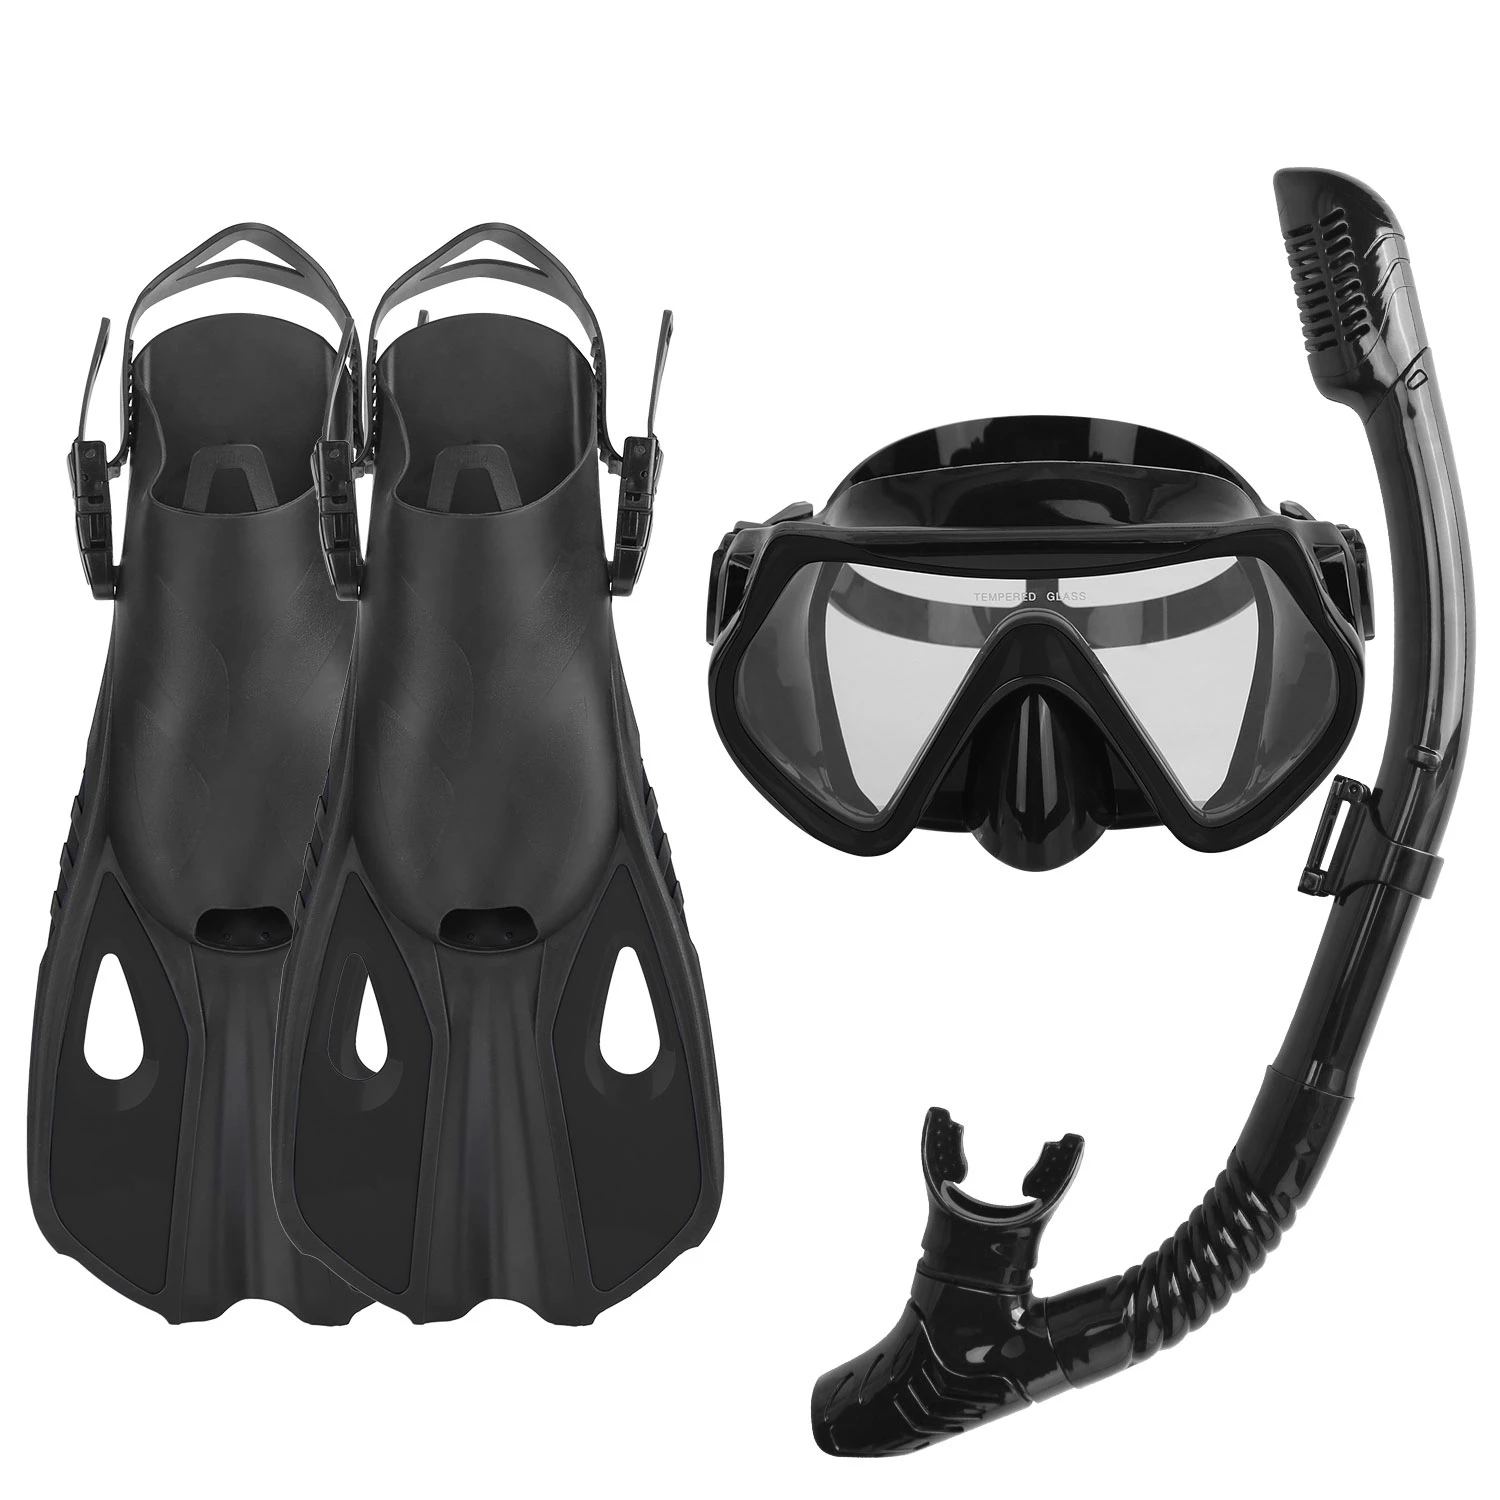 Snorkeling Gear Mask Fin Snorkel Set With Diving Mask Dry Top Snorkel Adjustable Swim Fins For Swimm